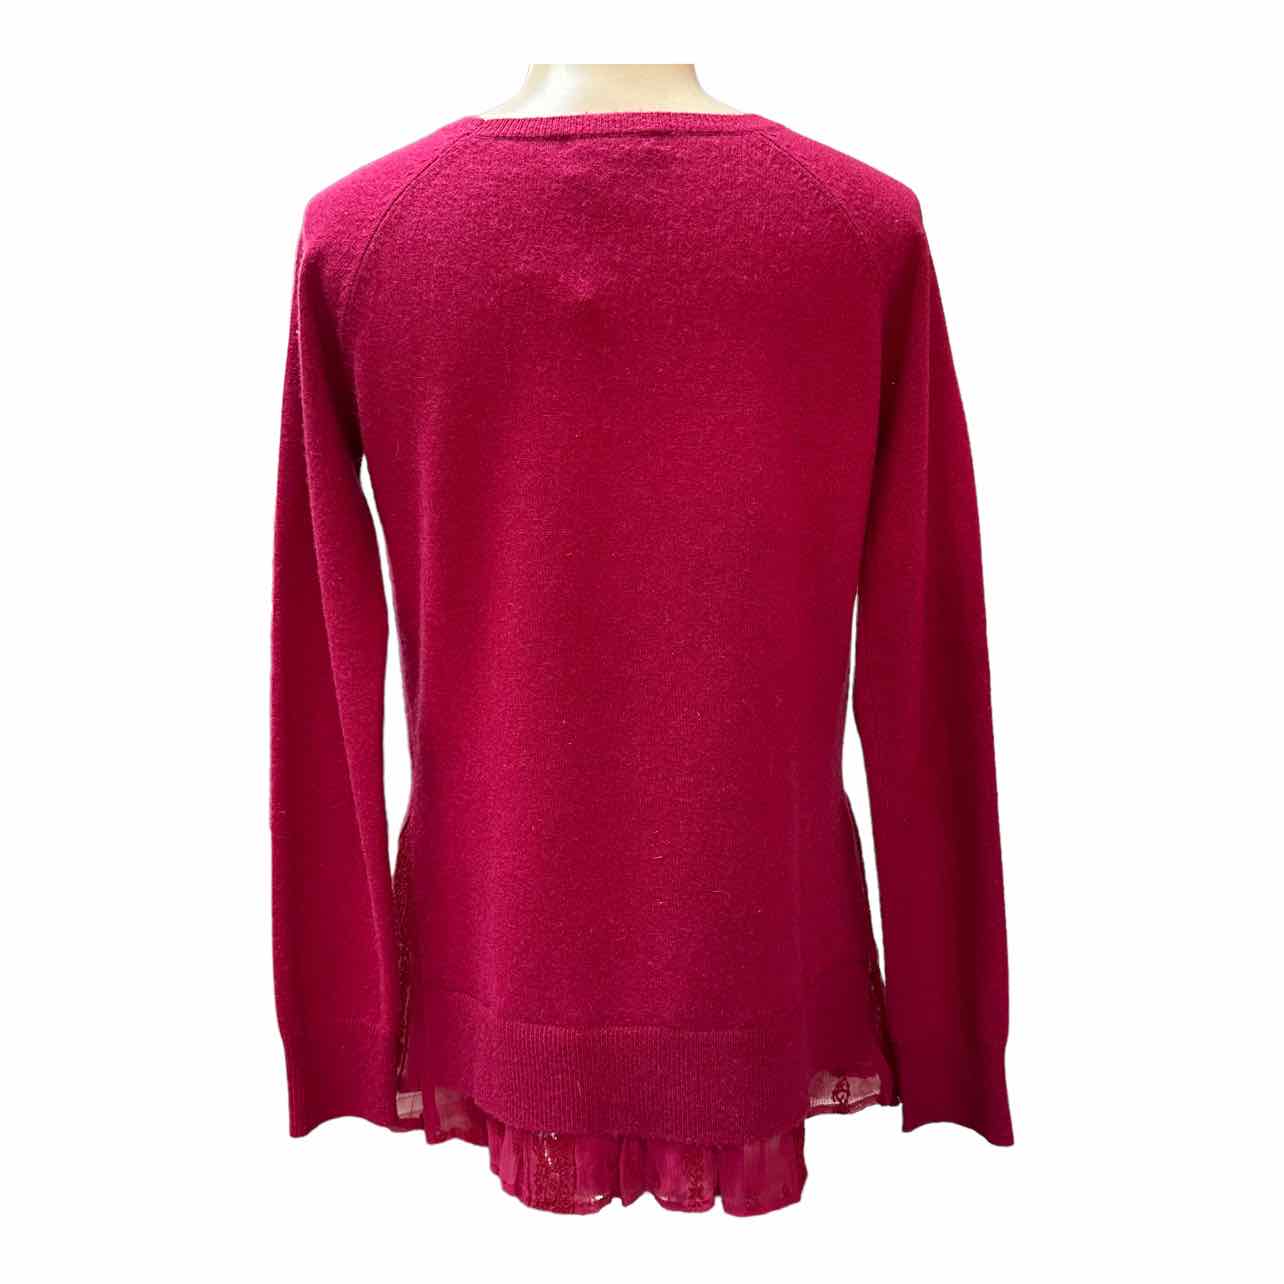 Garnet Hill Size XS Sweater